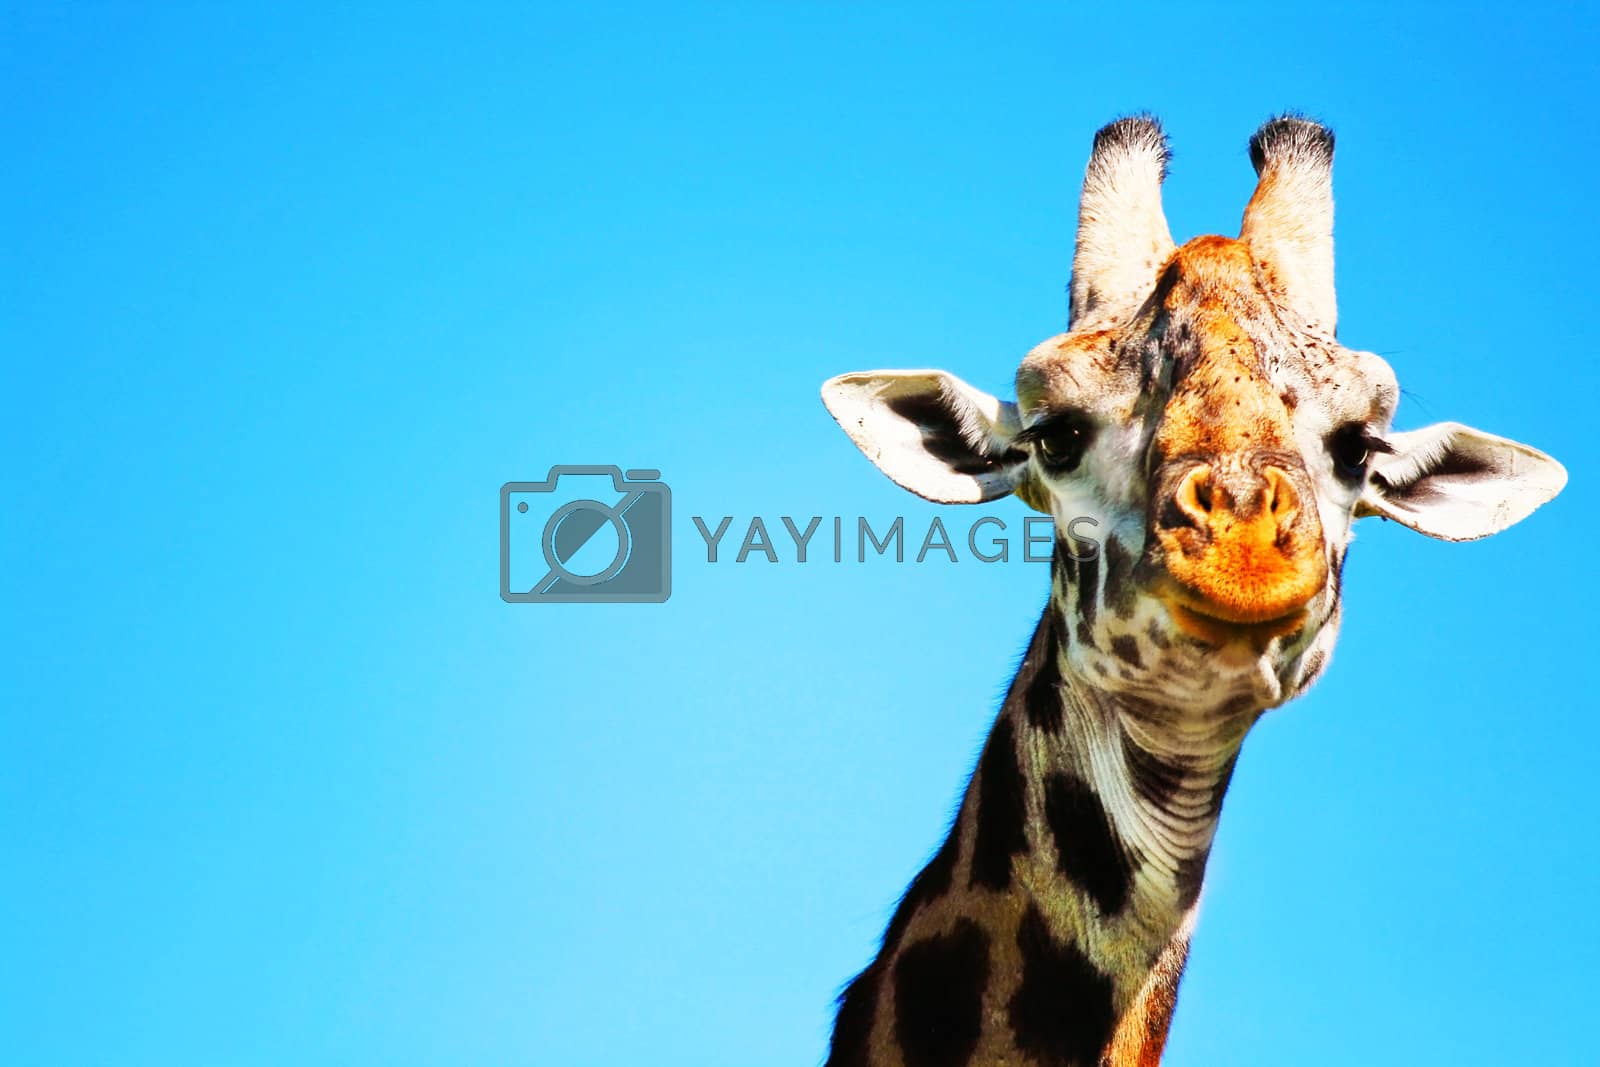 Royalty free image of Portrait of Giraffe by Anna_Omelchenko